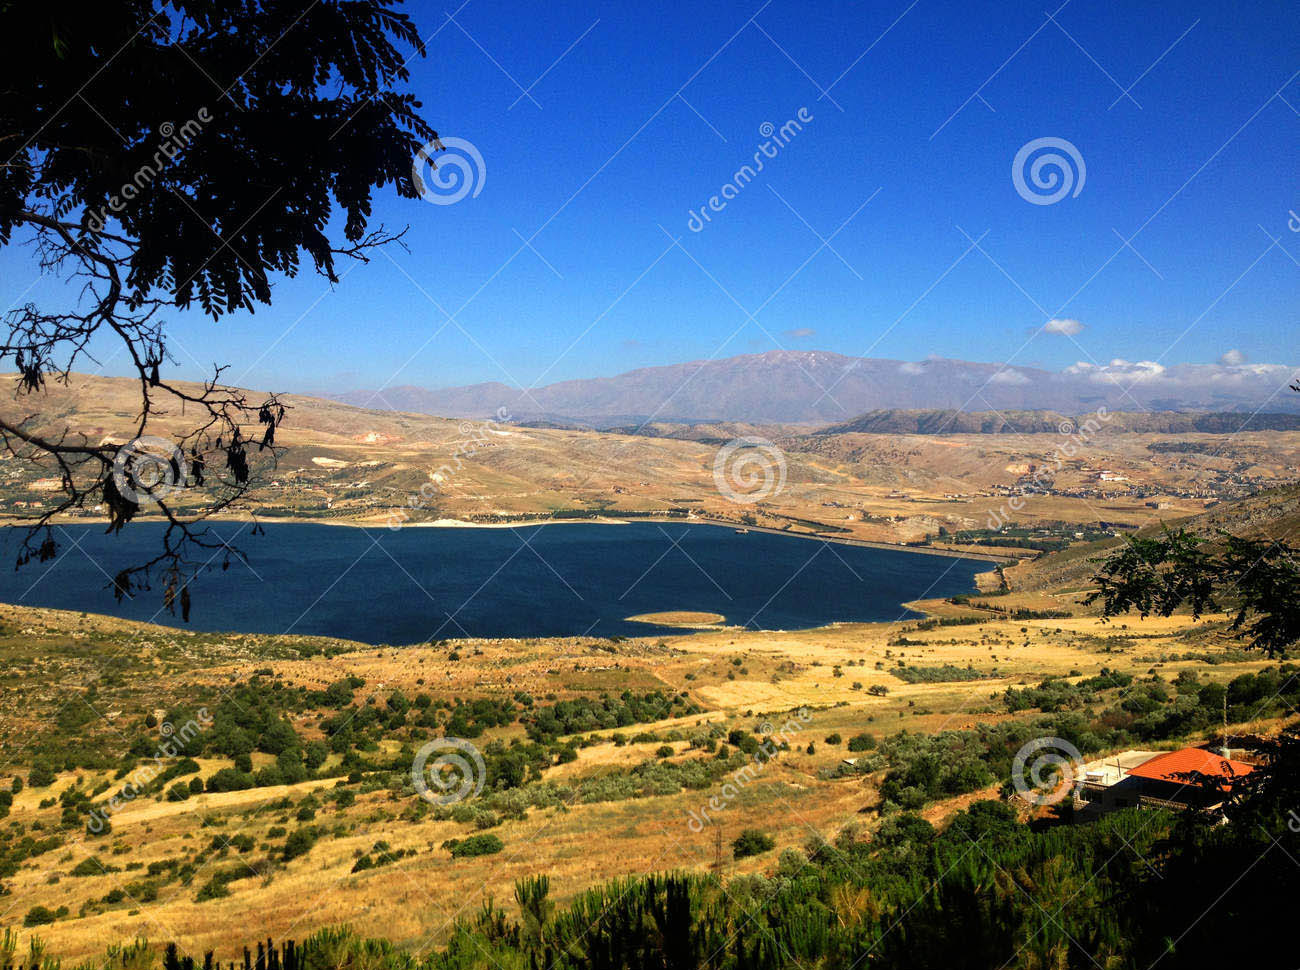 lebanese-landscape-bekaa-valley-beqaa-bekaa-valley-baalbeck-lebanon-highway-58564370.jpg  by modeldad